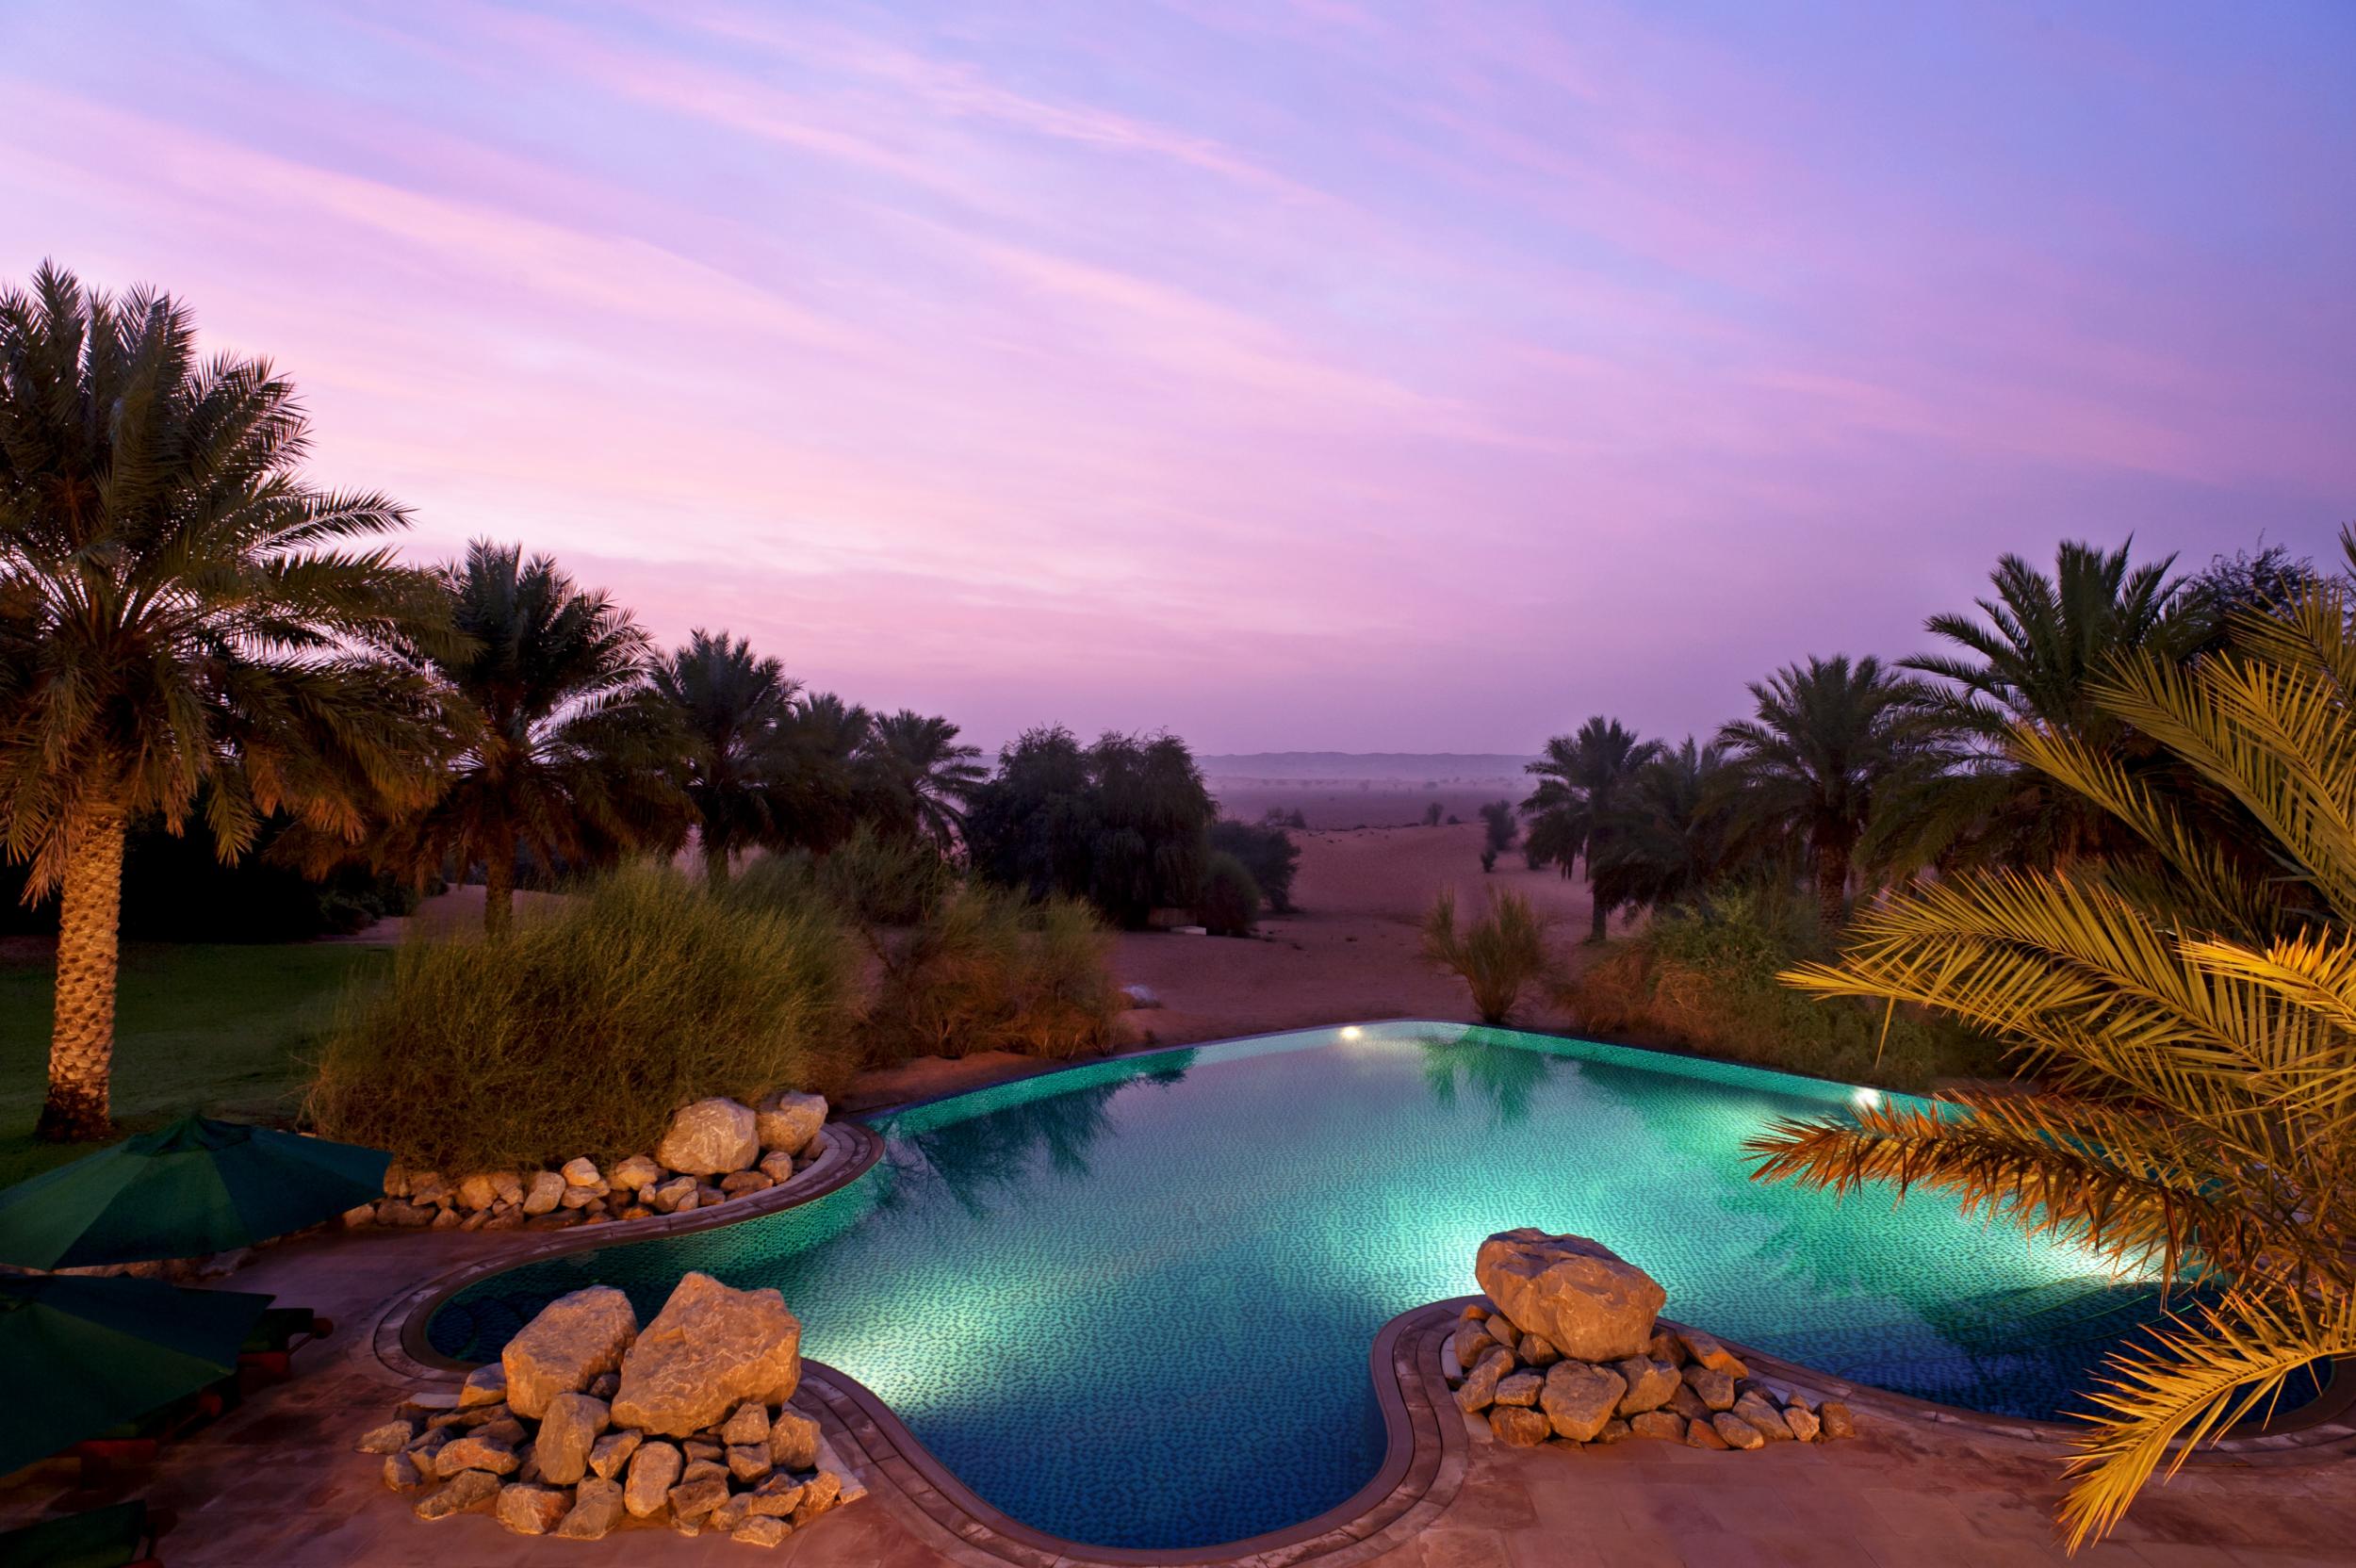 Dusk in the desert: Al Maha’s main pool